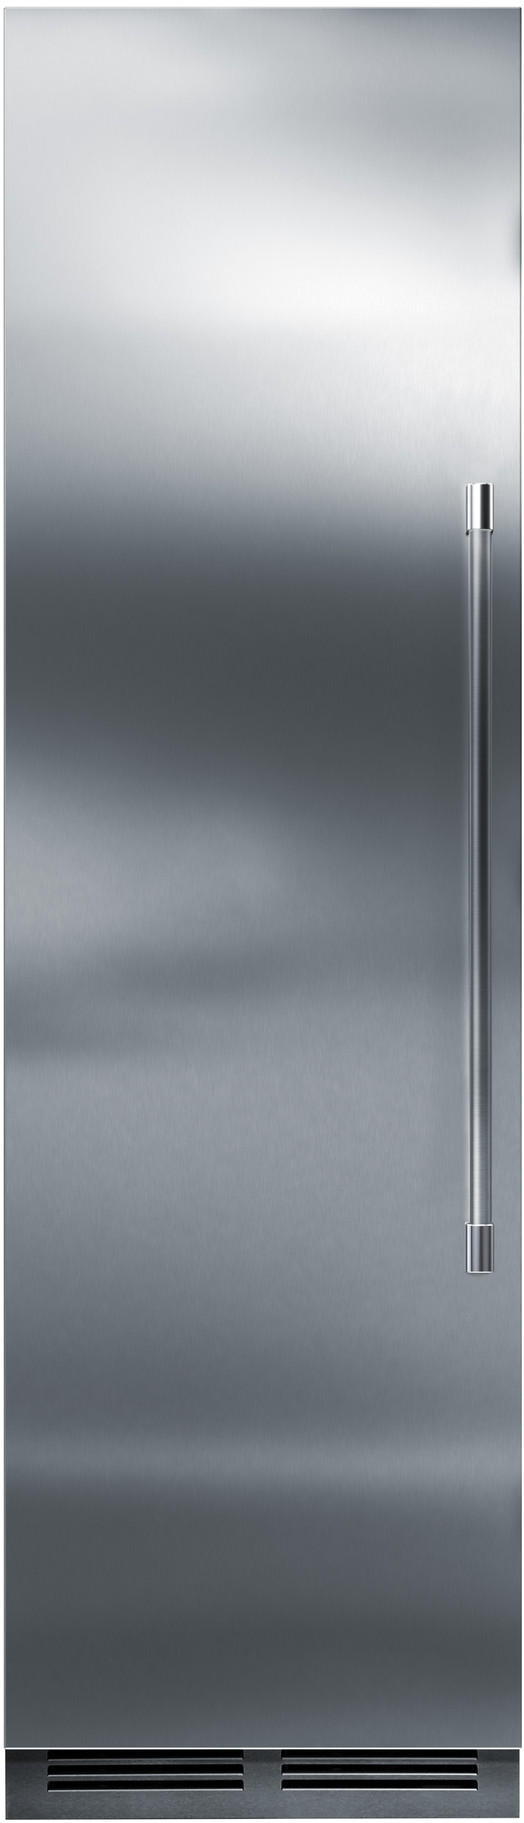 Perlick 24 Inch 24 Built In Counter Depth Column Refrigerator CR24R12L